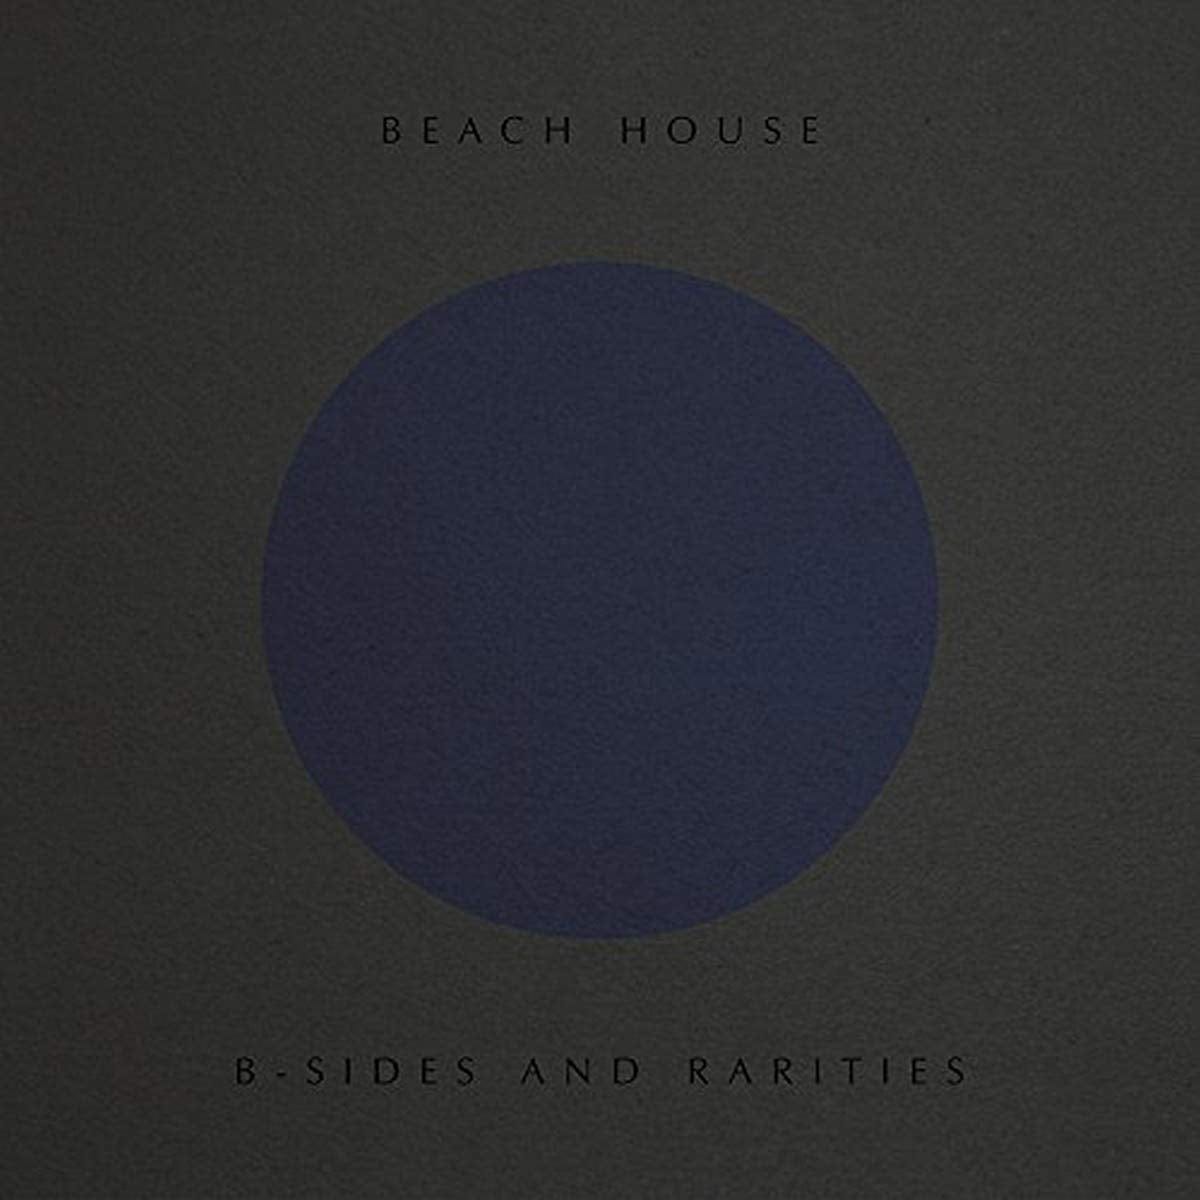 Beach House - B-Sides and Rarities - Black Vinyl - Third Eye